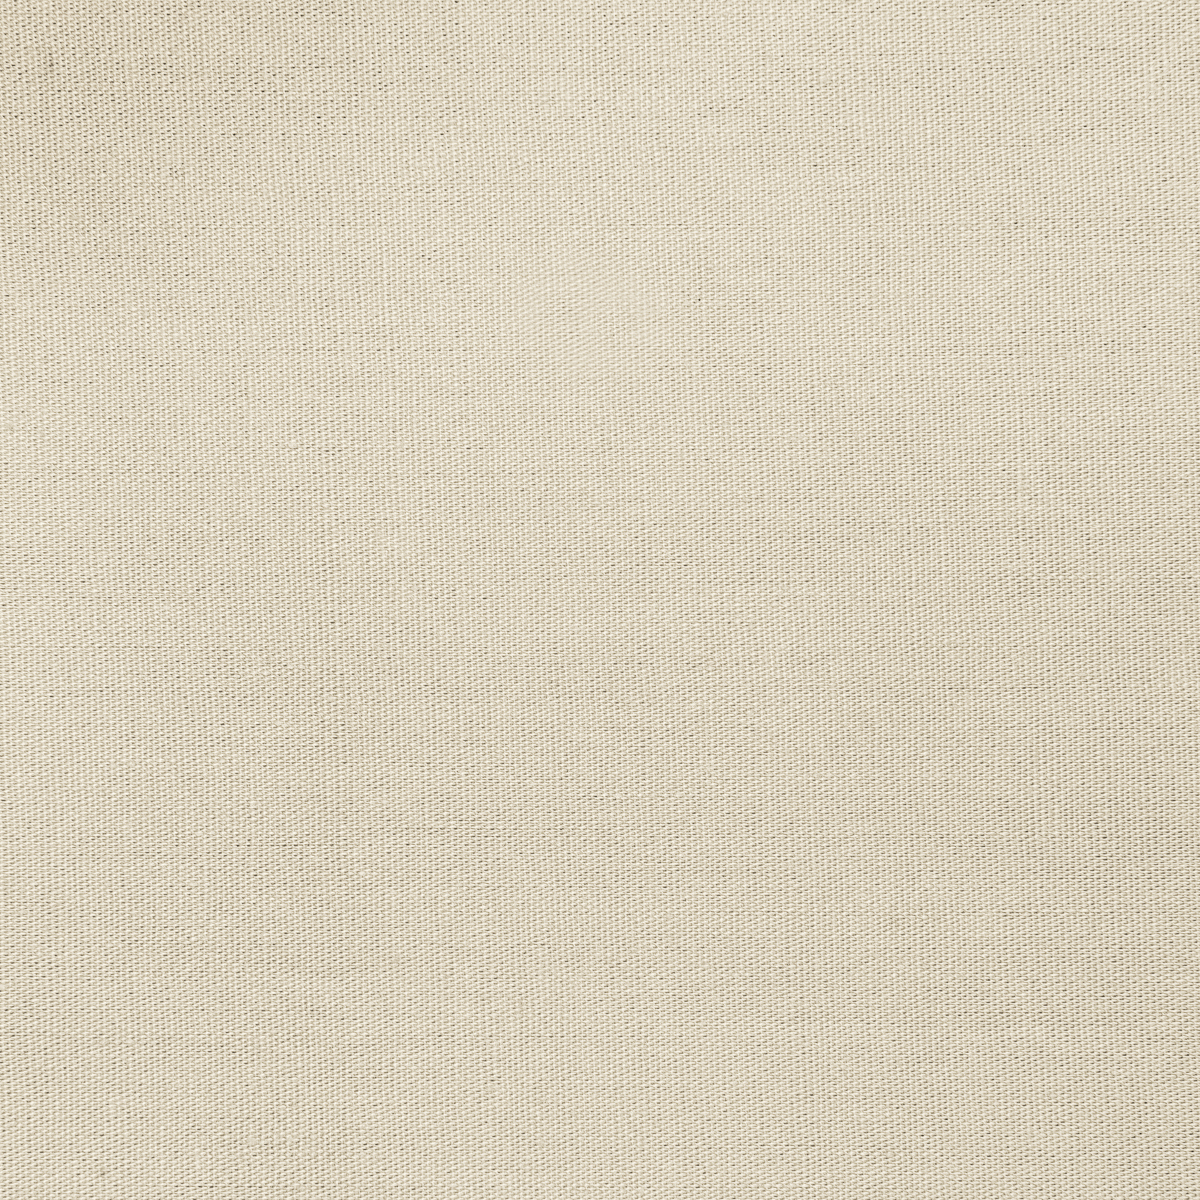 Biertischhusse bodenlang Polyester-Creme / 200x50 cm